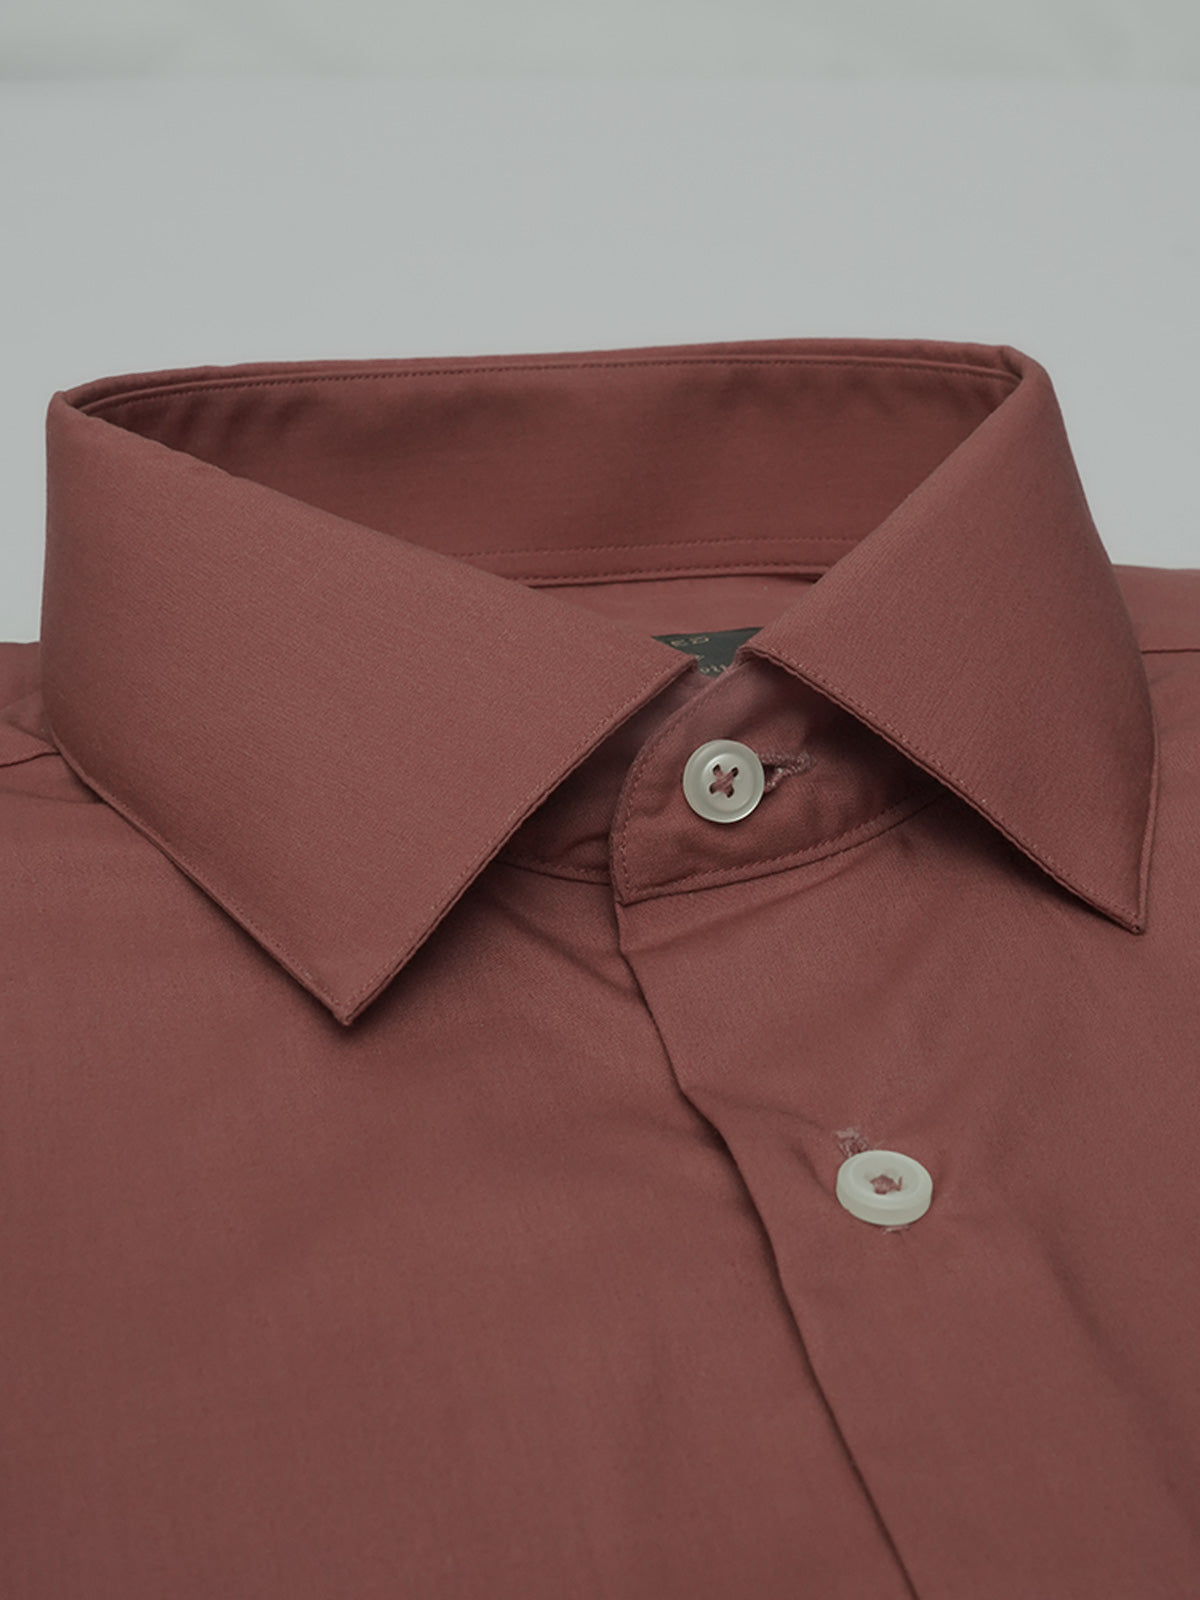 Coral Plain, Elite Edition, French Collar Men’s Formal Shirt (FS-490)